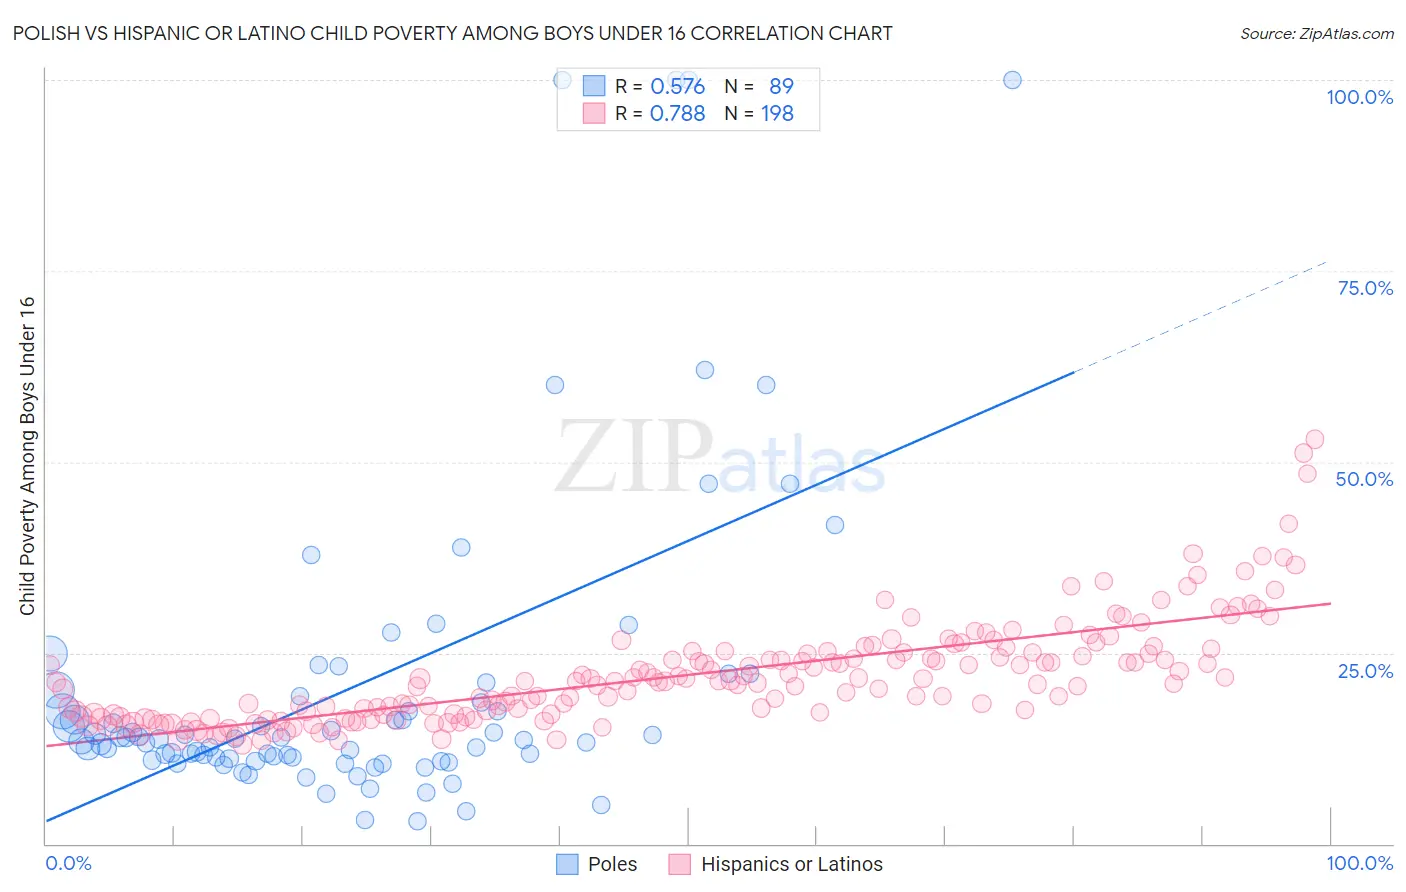 Polish vs Hispanic or Latino Child Poverty Among Boys Under 16